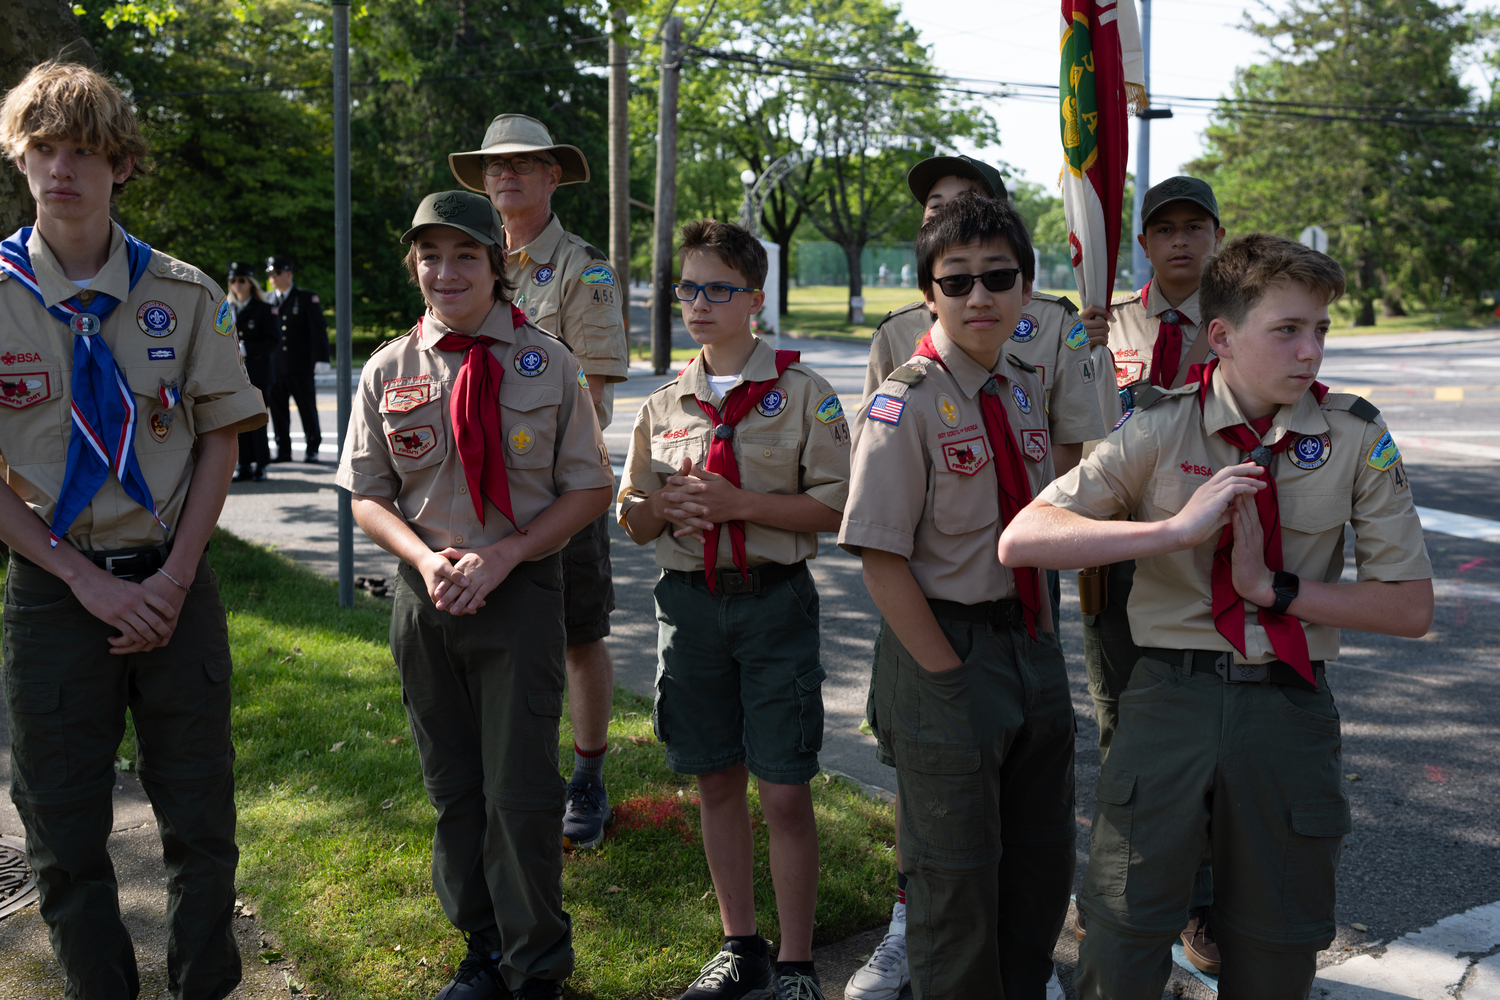 Members of Sag Harbor Boy Scout Troop 455 wait for the parade to begin. LORI HAWKINS